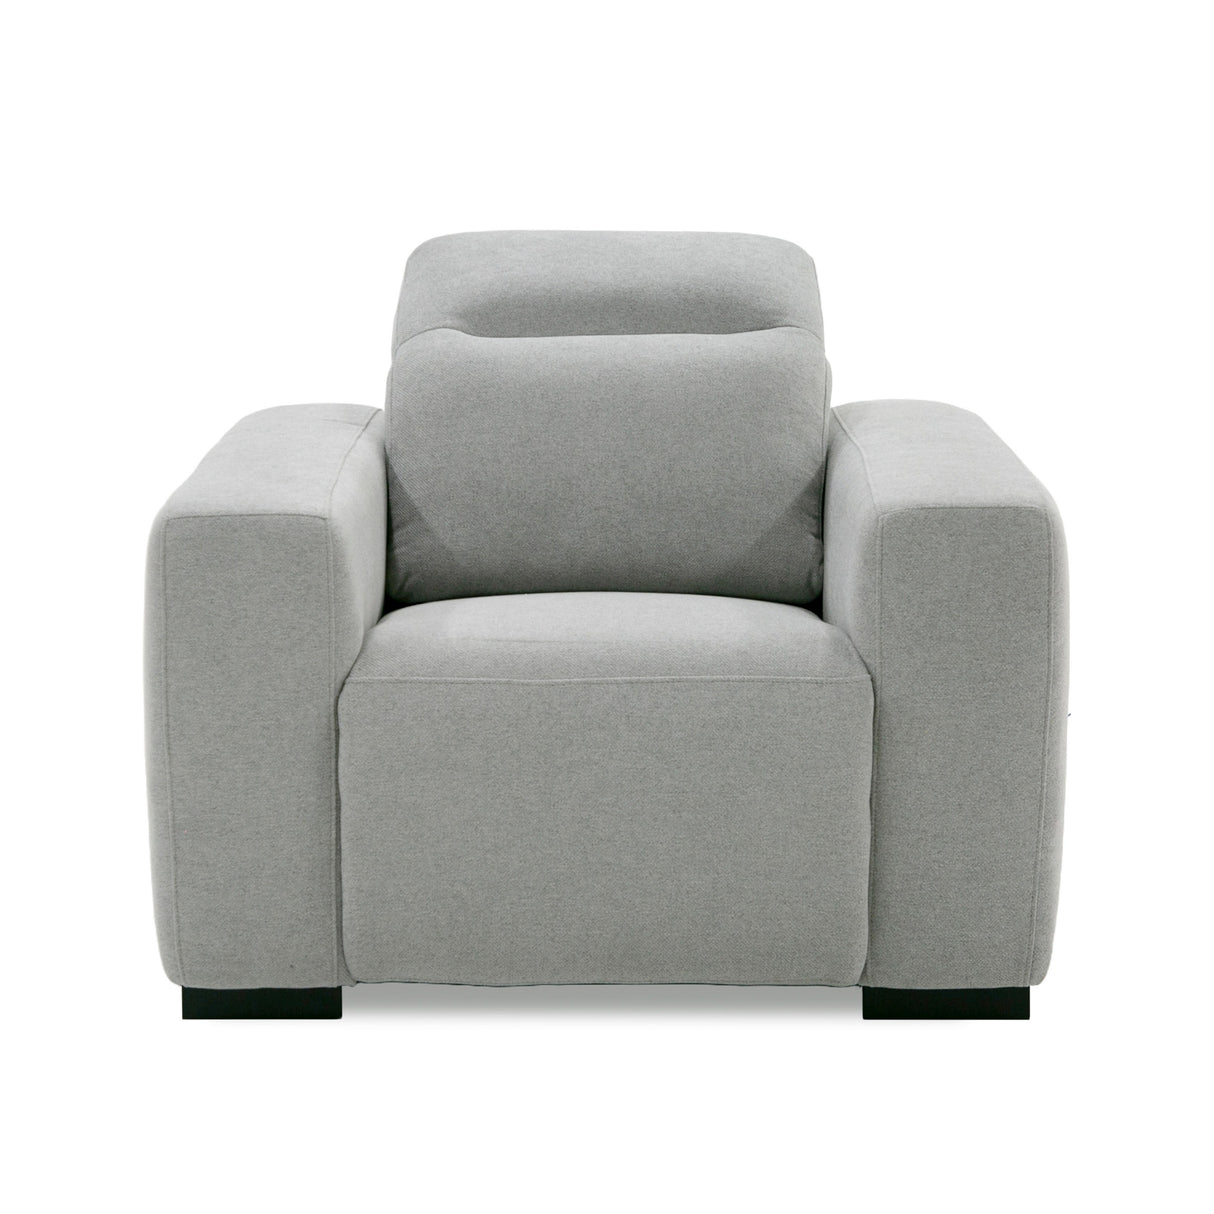 Vig Furniture Divani Casa Bode - Modern Grey Fabric Recliner Chair